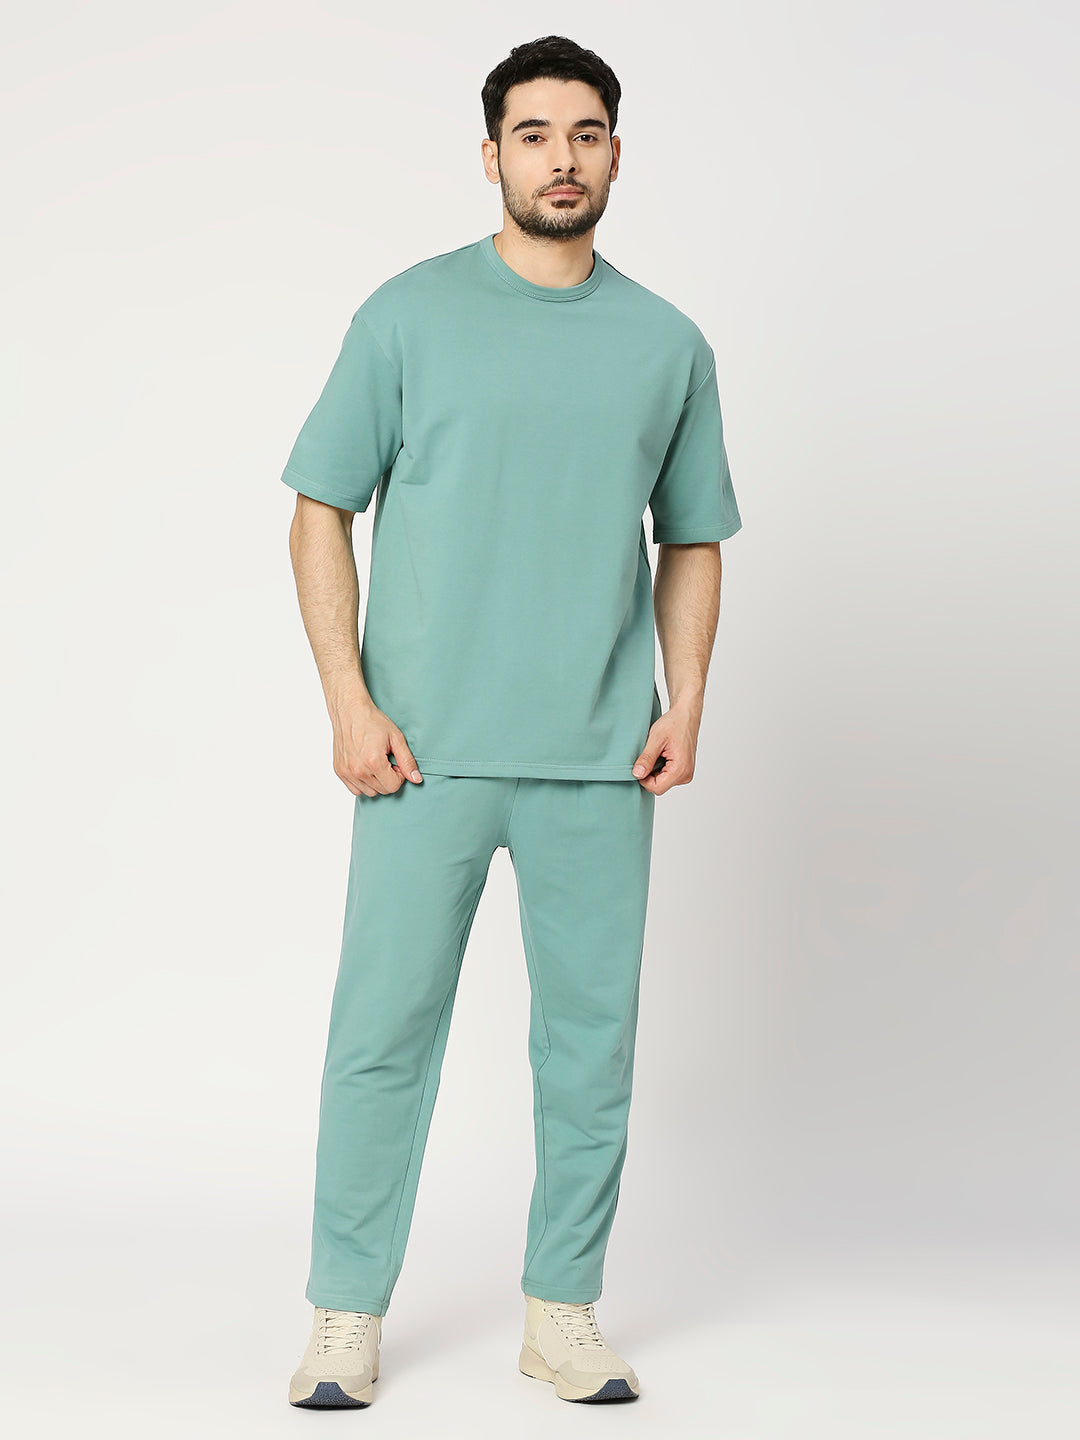 Buy Blamblack Men's Solid Aqua Green Round Neck, Half sleeves Tshirt with Pants Co-Ord Set.